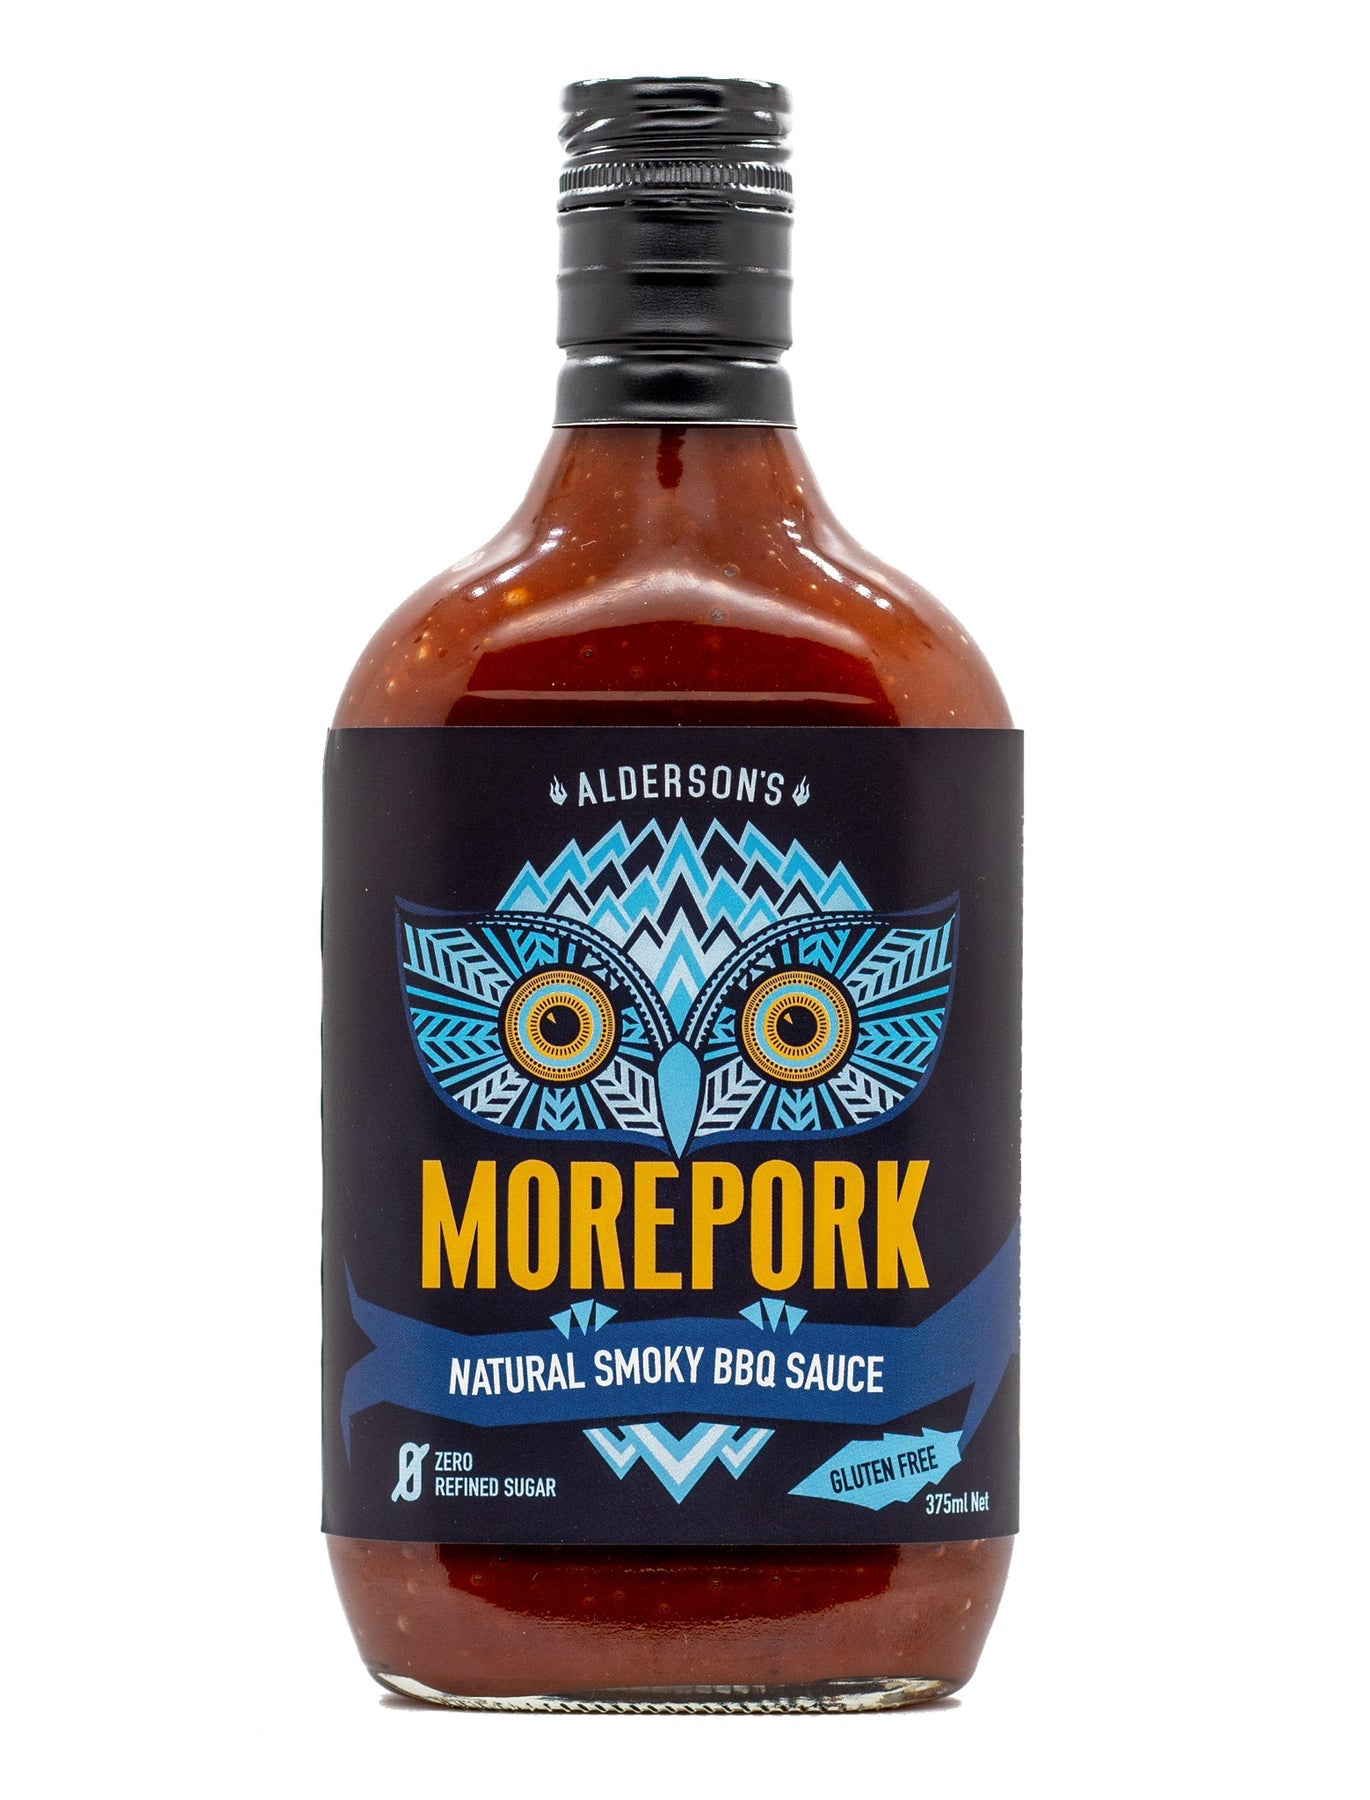 Alderson's Morepork Natural Smoky BBQ Sauce